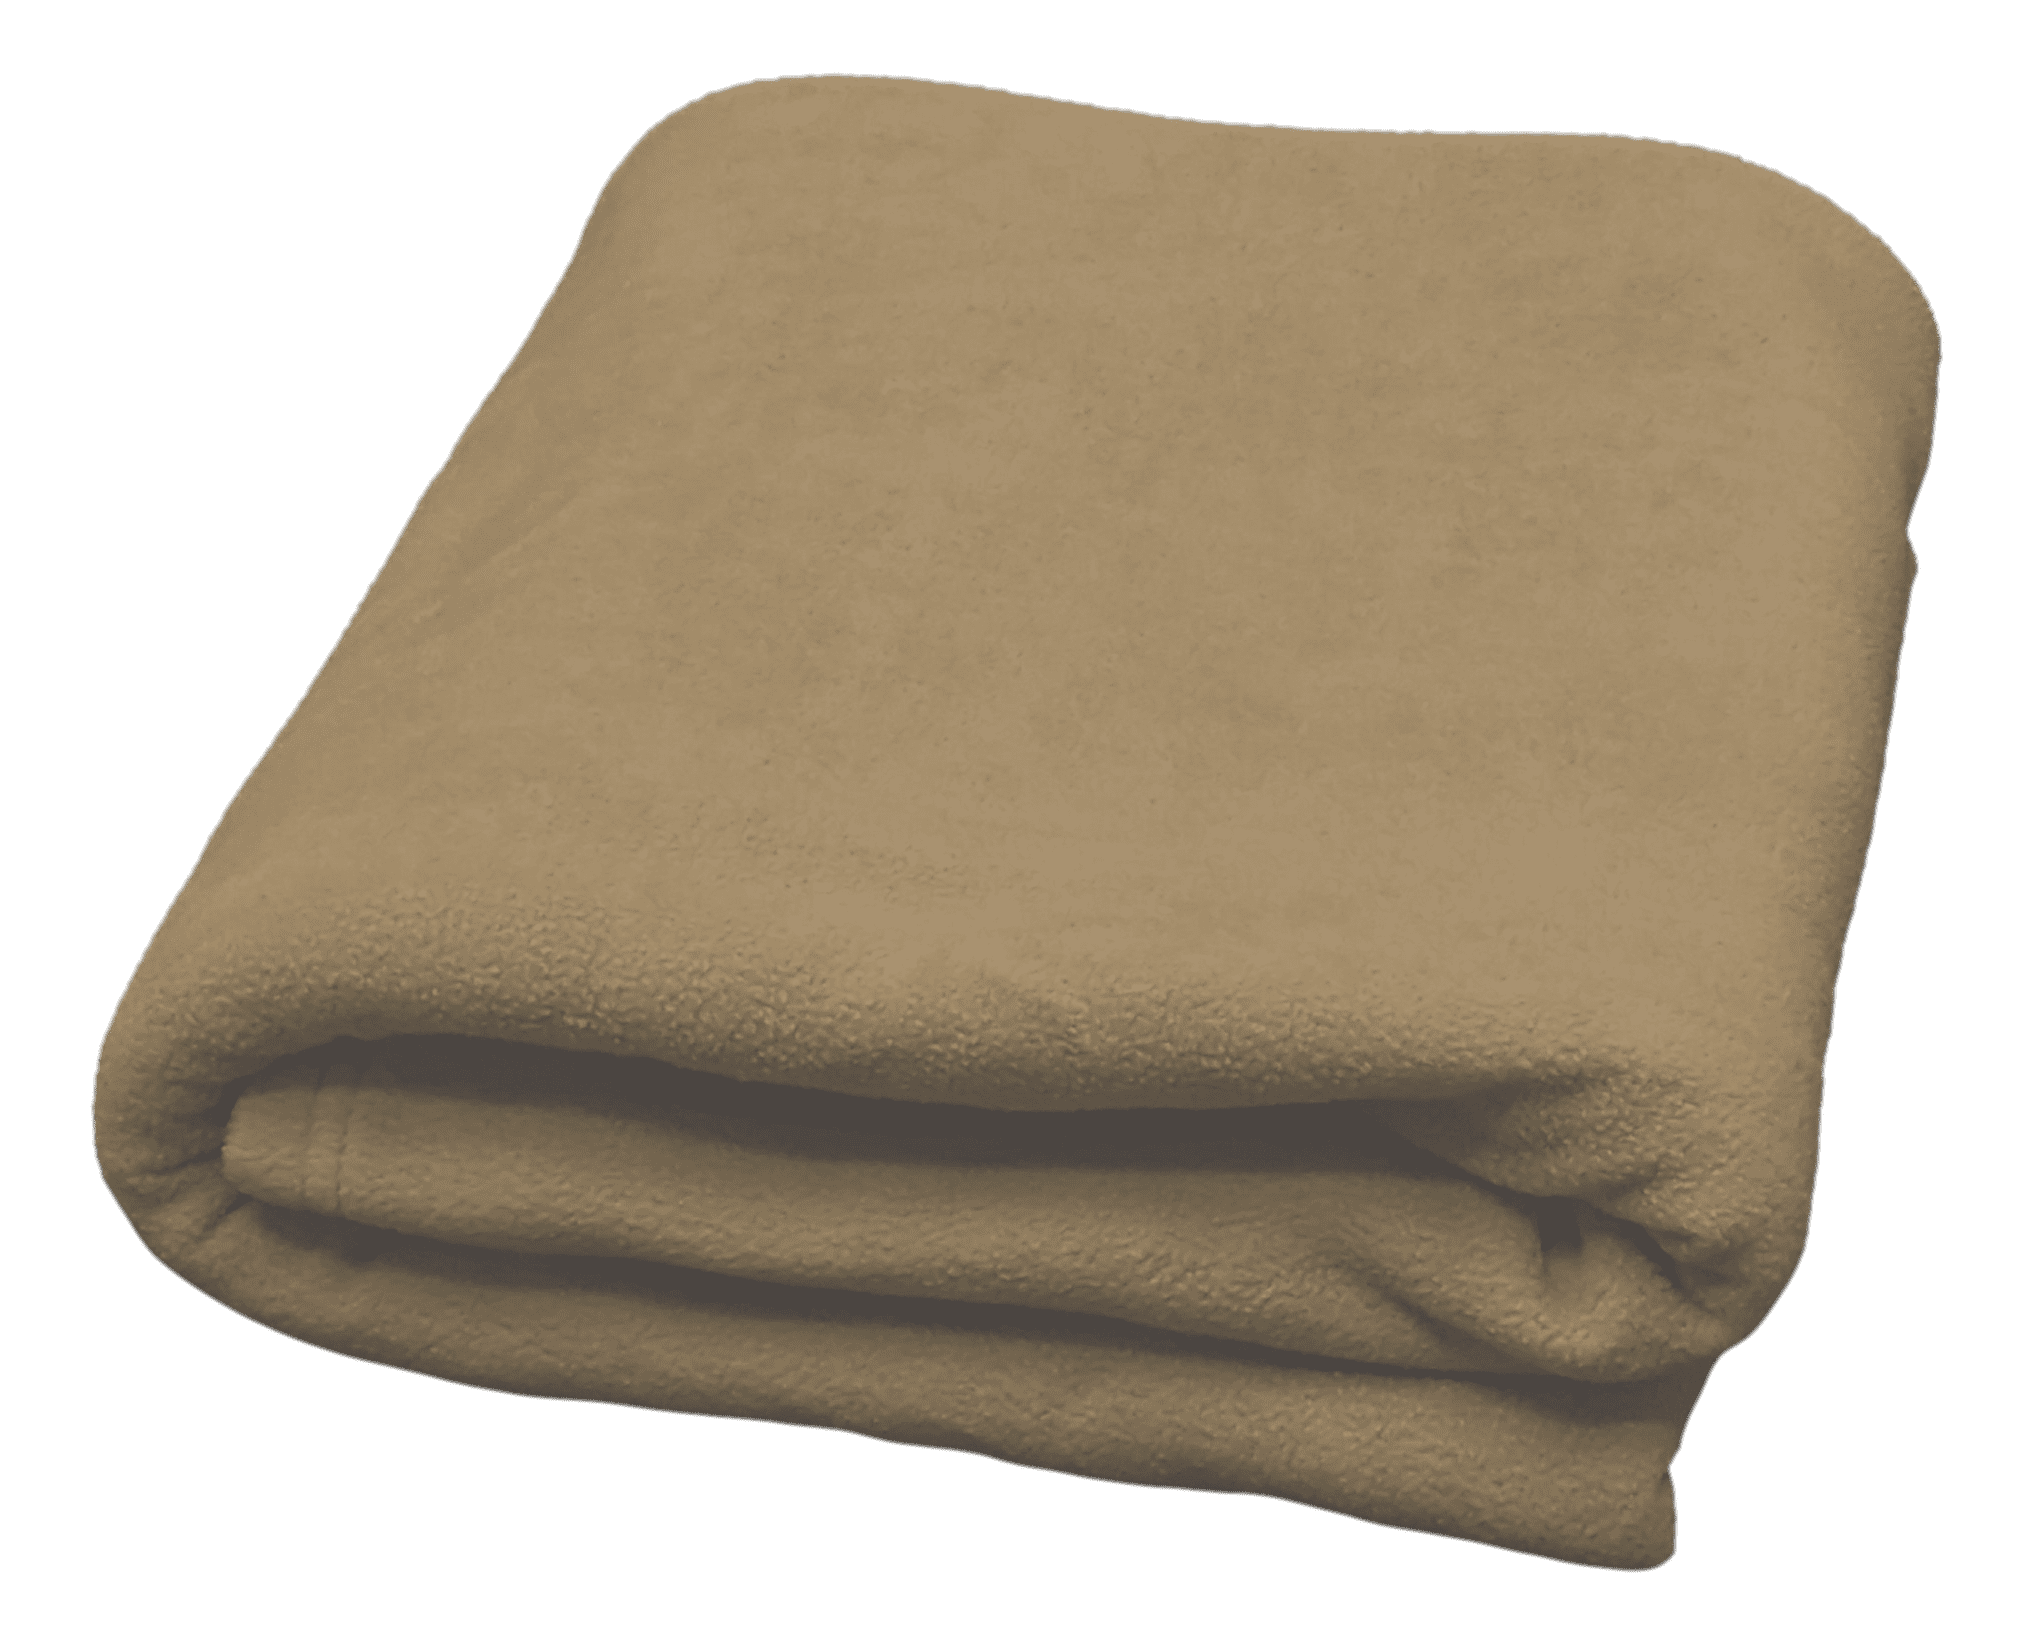 Modern Blanket Super Soft Throw Bedding Fleece Brown Beige Blocks King 